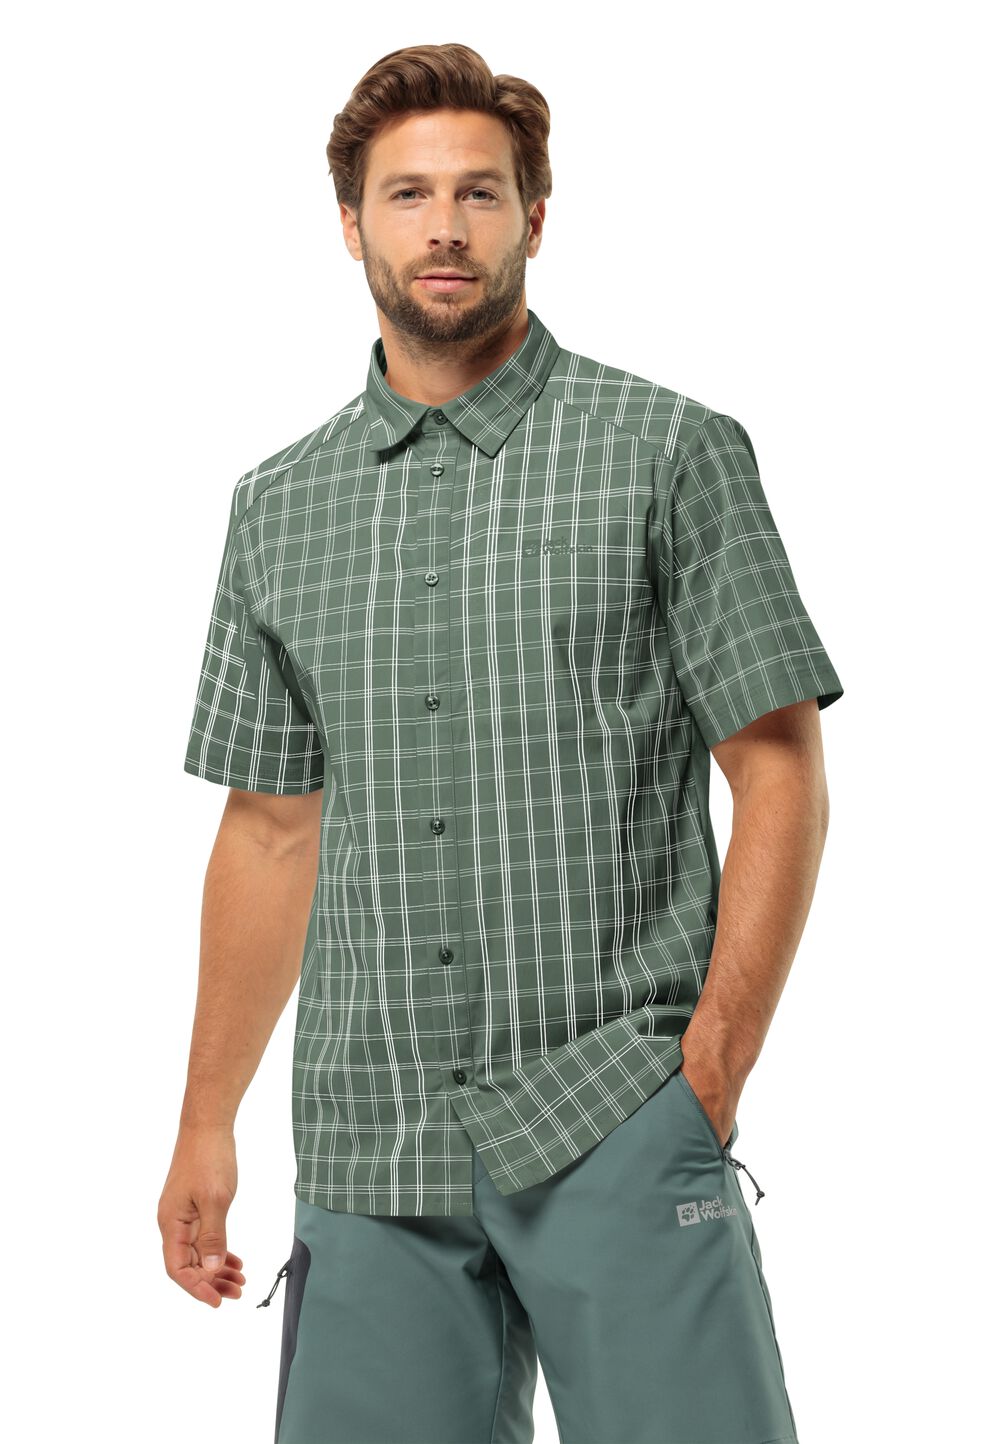 Jack Wolfskin Norbo S S Shirt Men Overhemd met korte mouwen Heren S hedge green checks hedge green checks